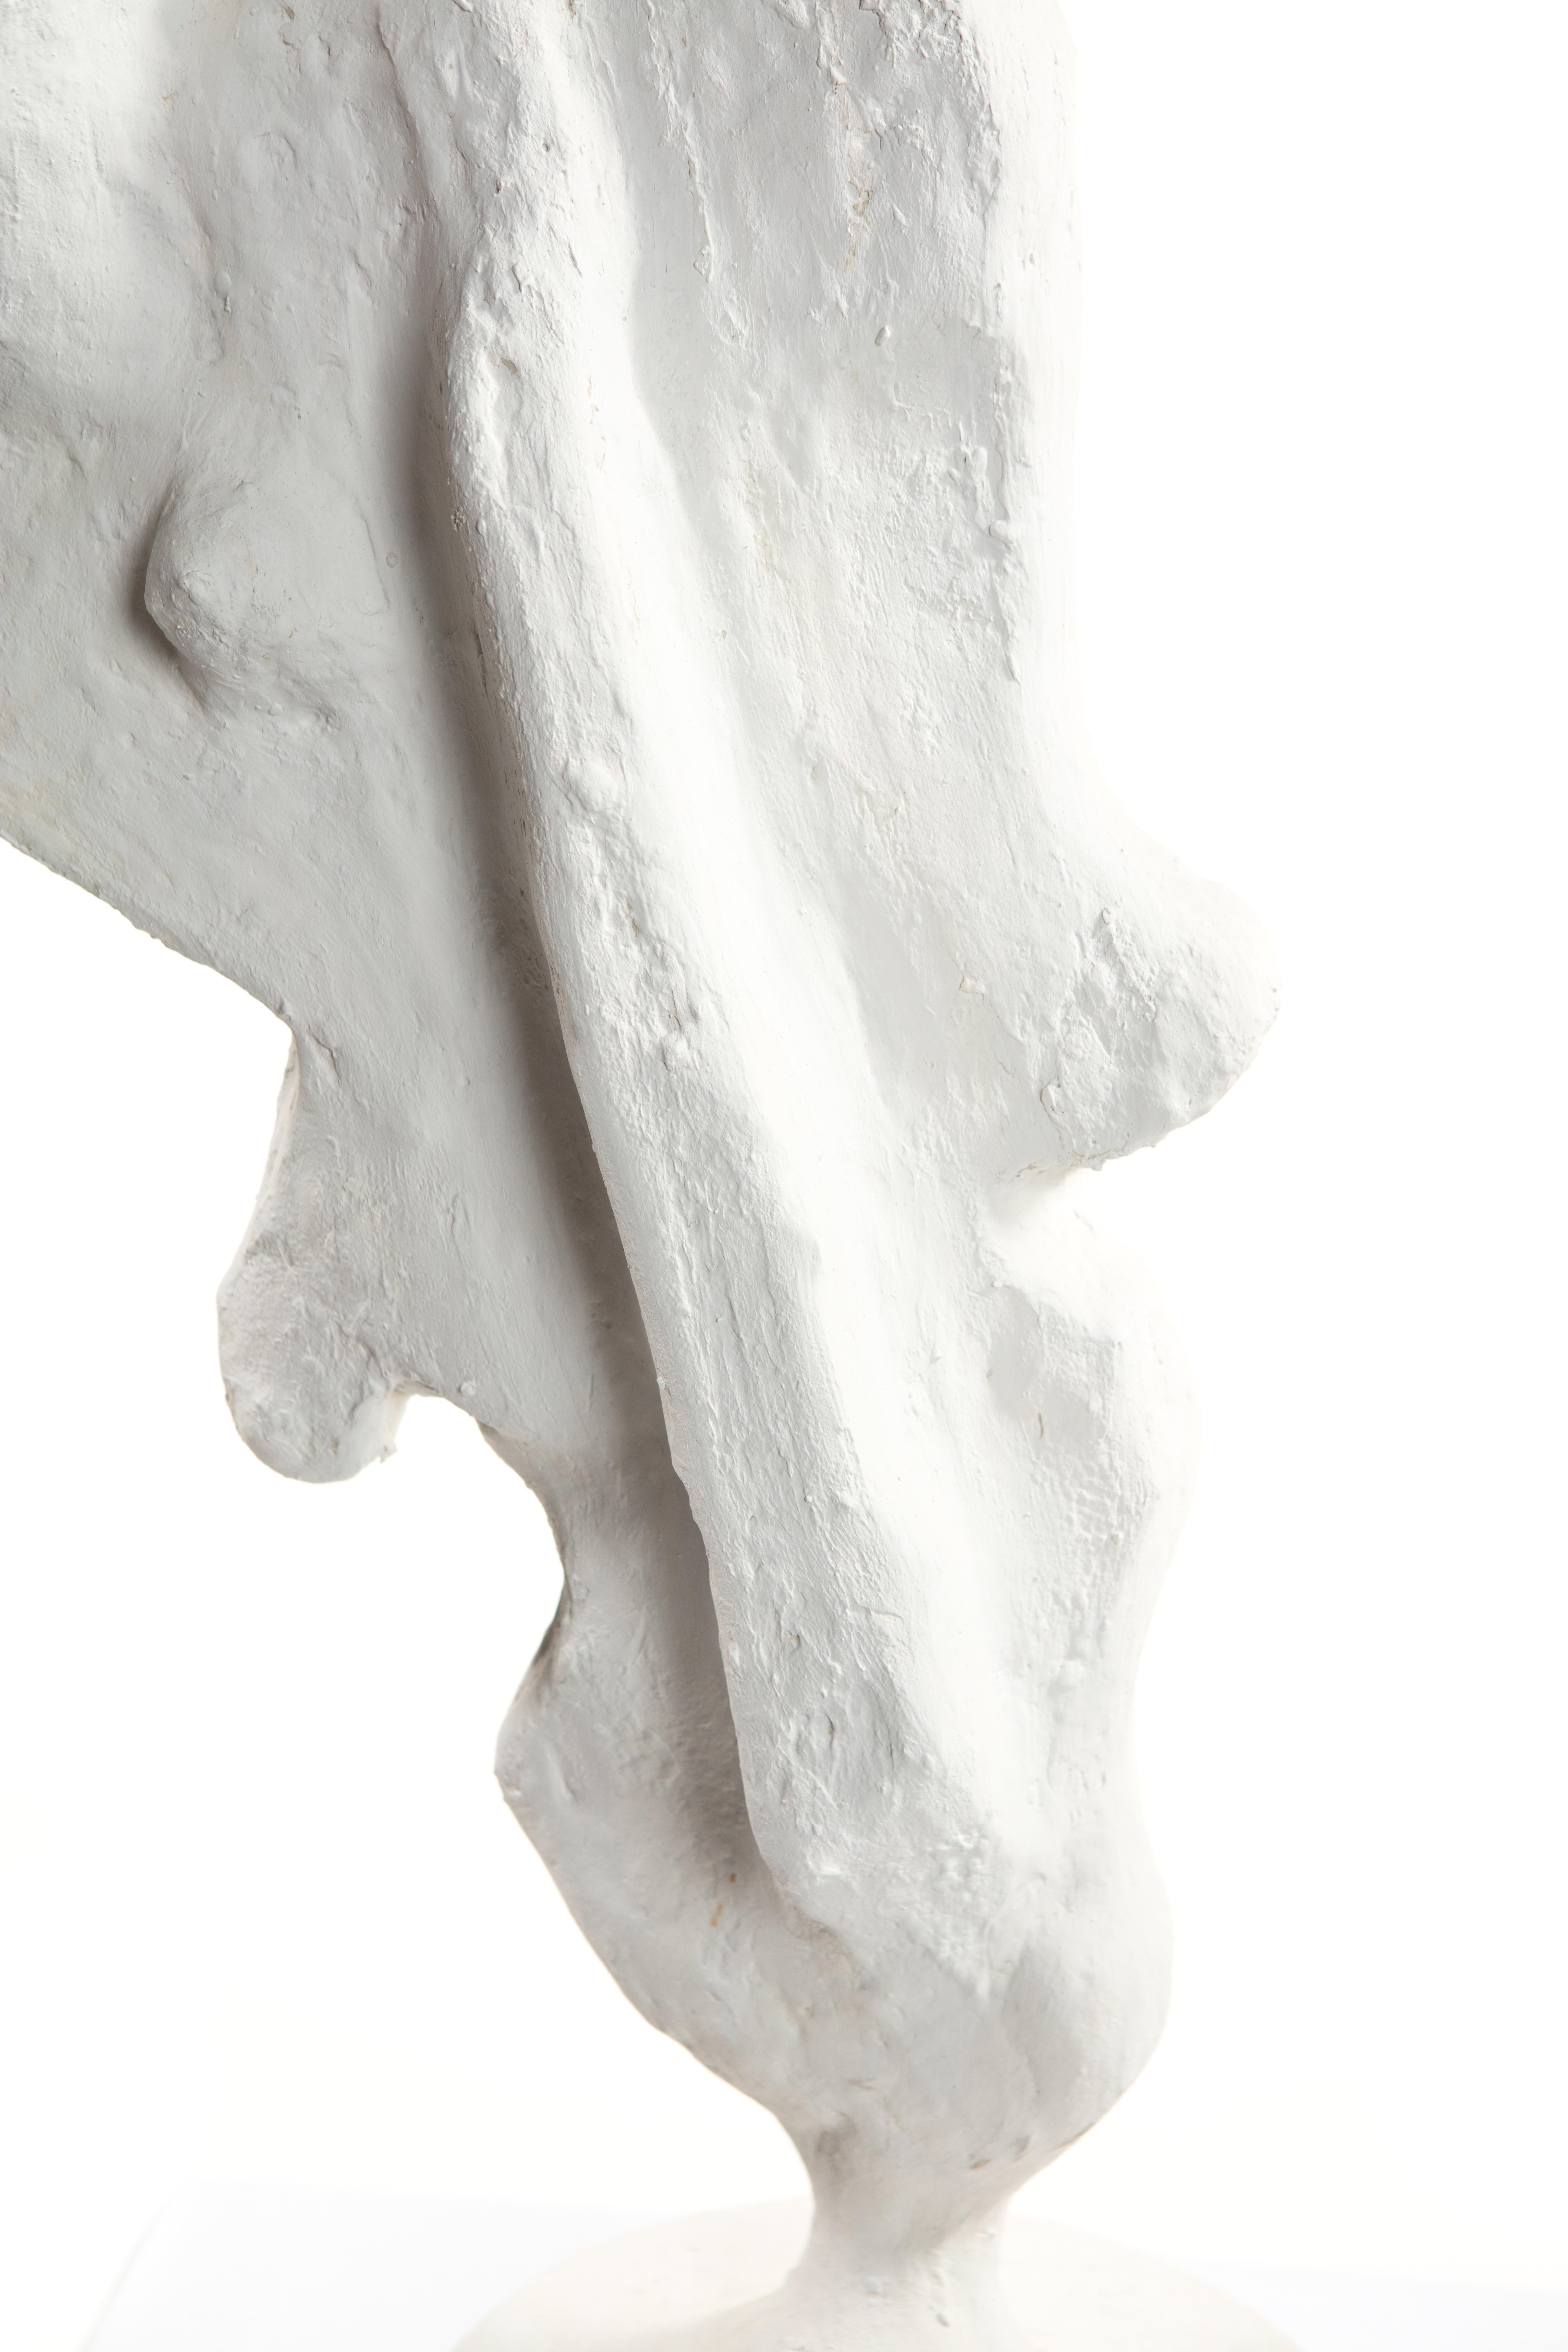 White Plaster Sculptural Table Lamp, 21st Century by Mattia Biagi For Sale 8